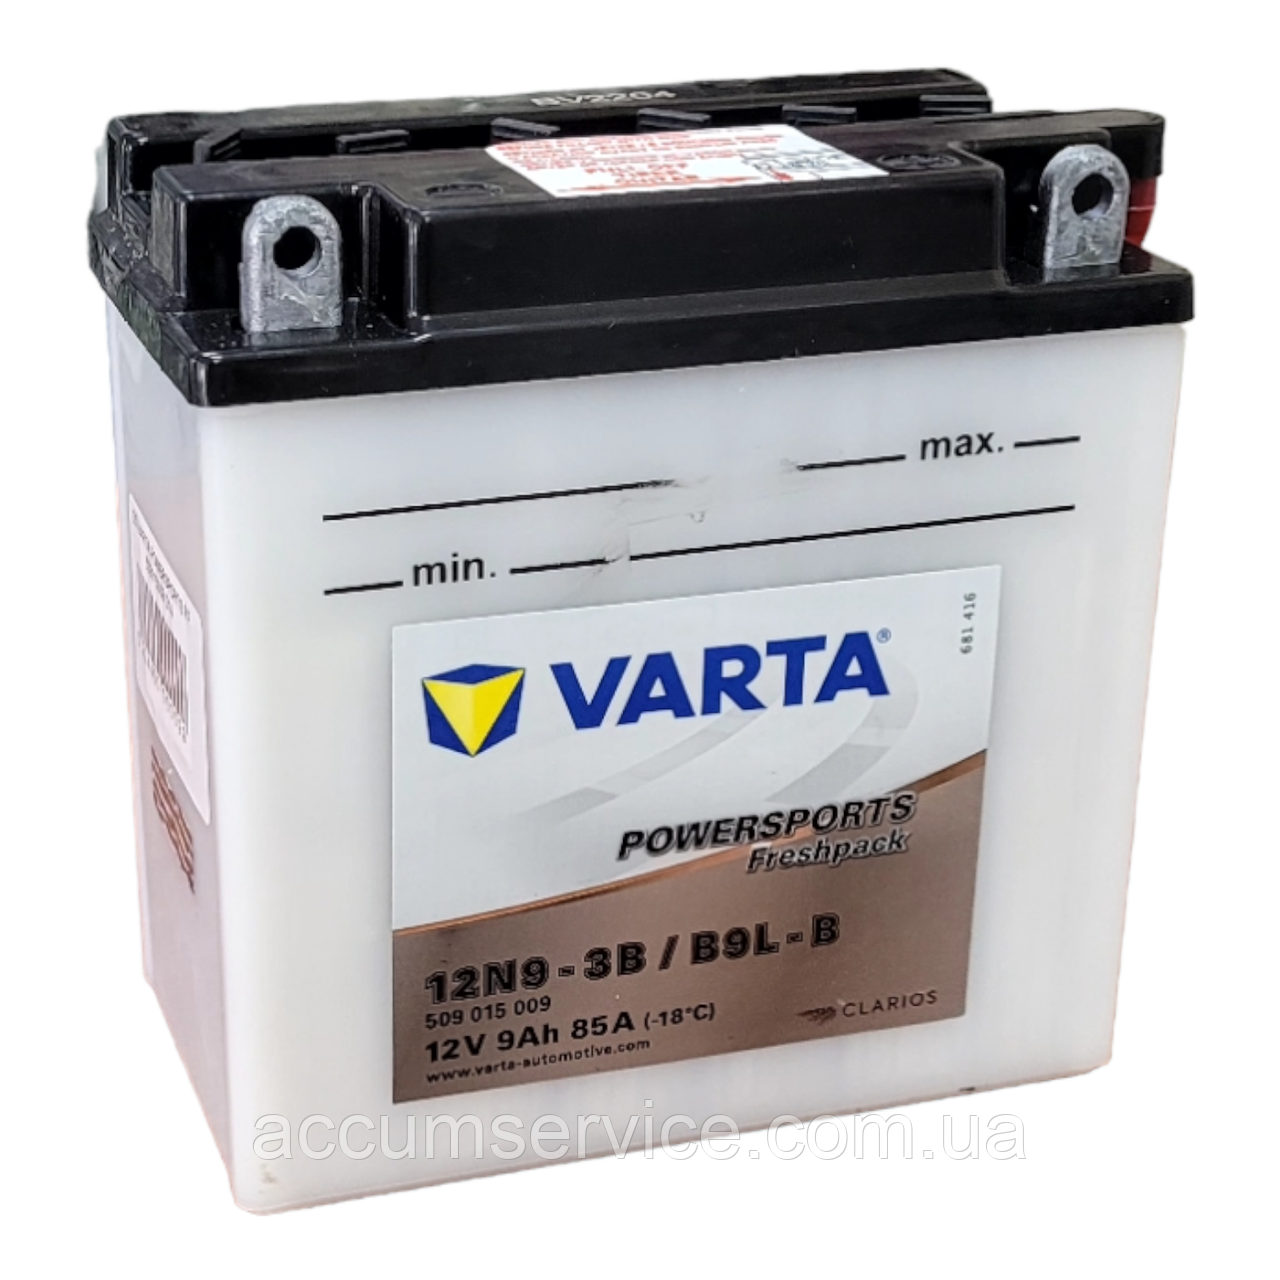 Акумулятор VARTA POWERSPORTS FP 509014009 I314